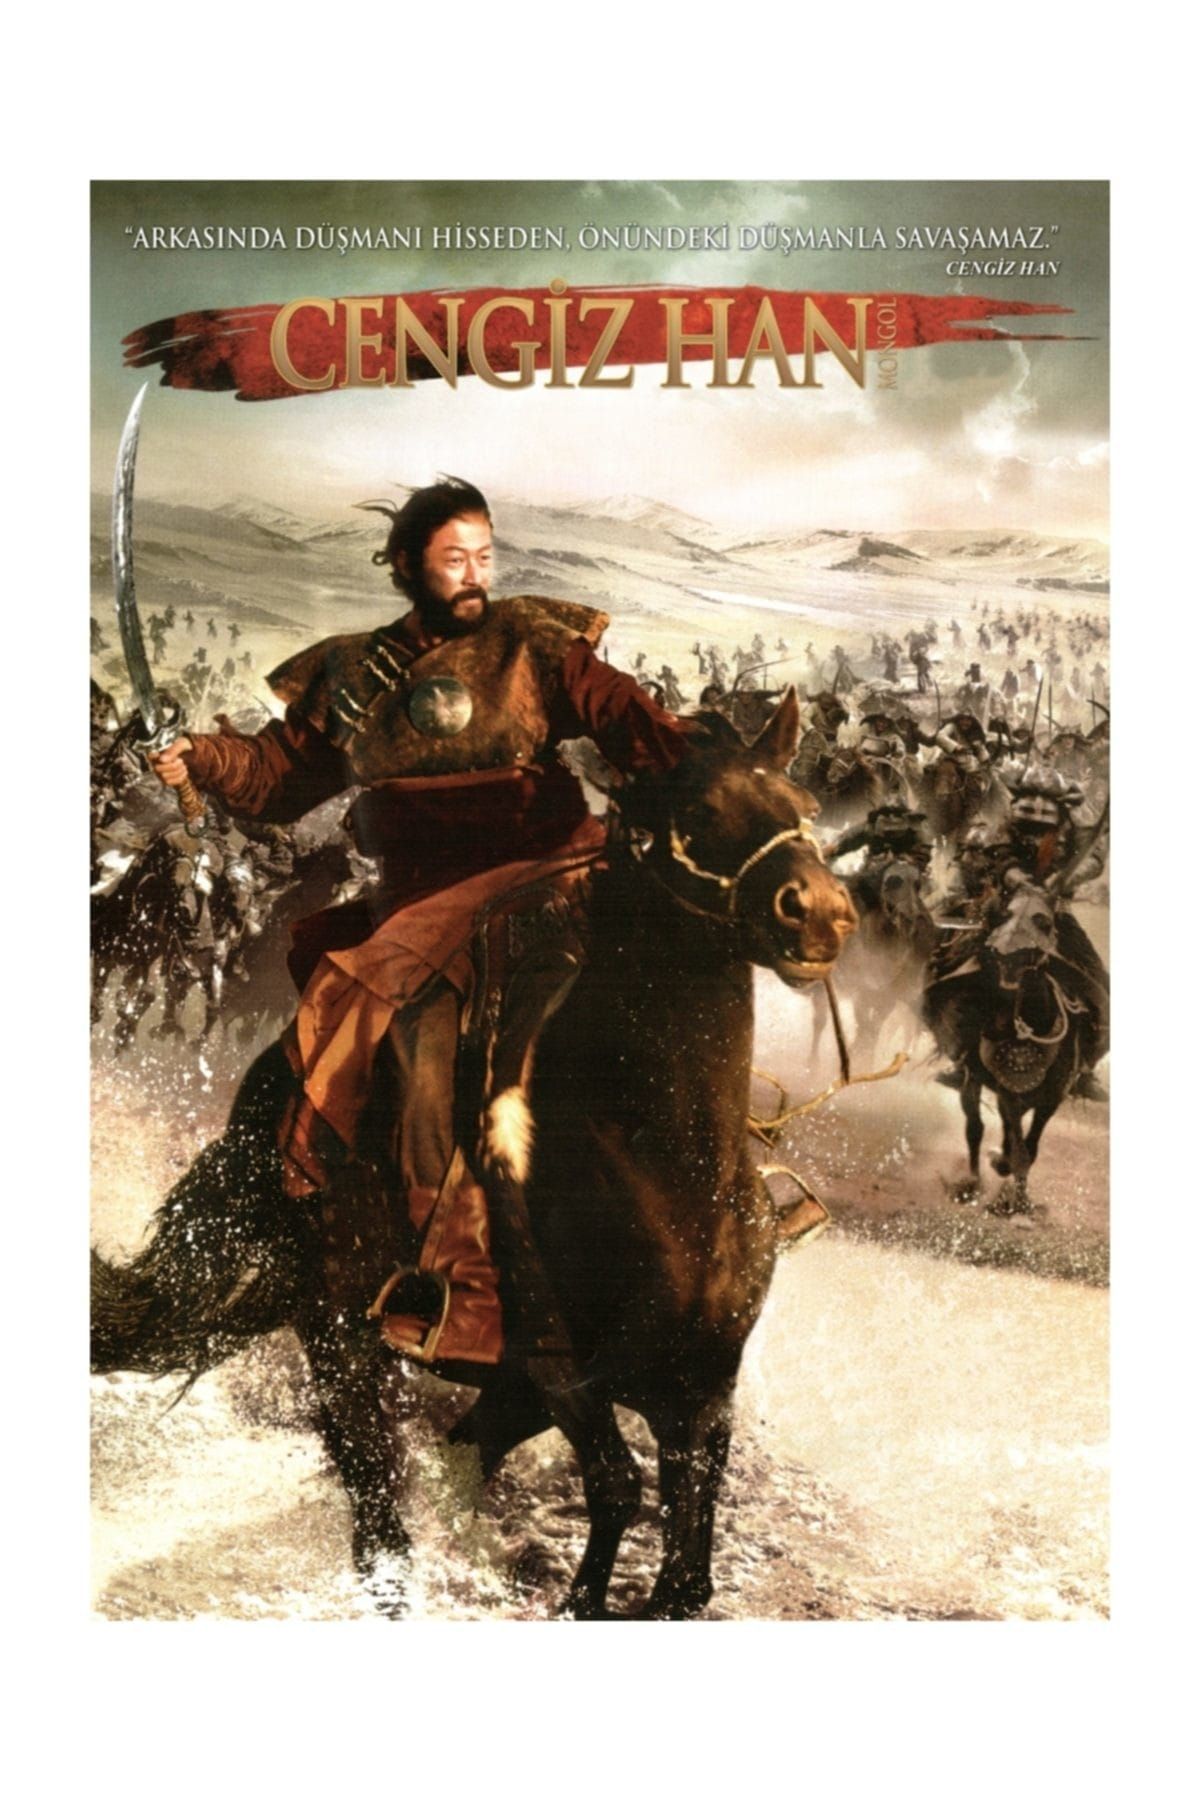 Pal DVD-Cengiz Han / Mongol